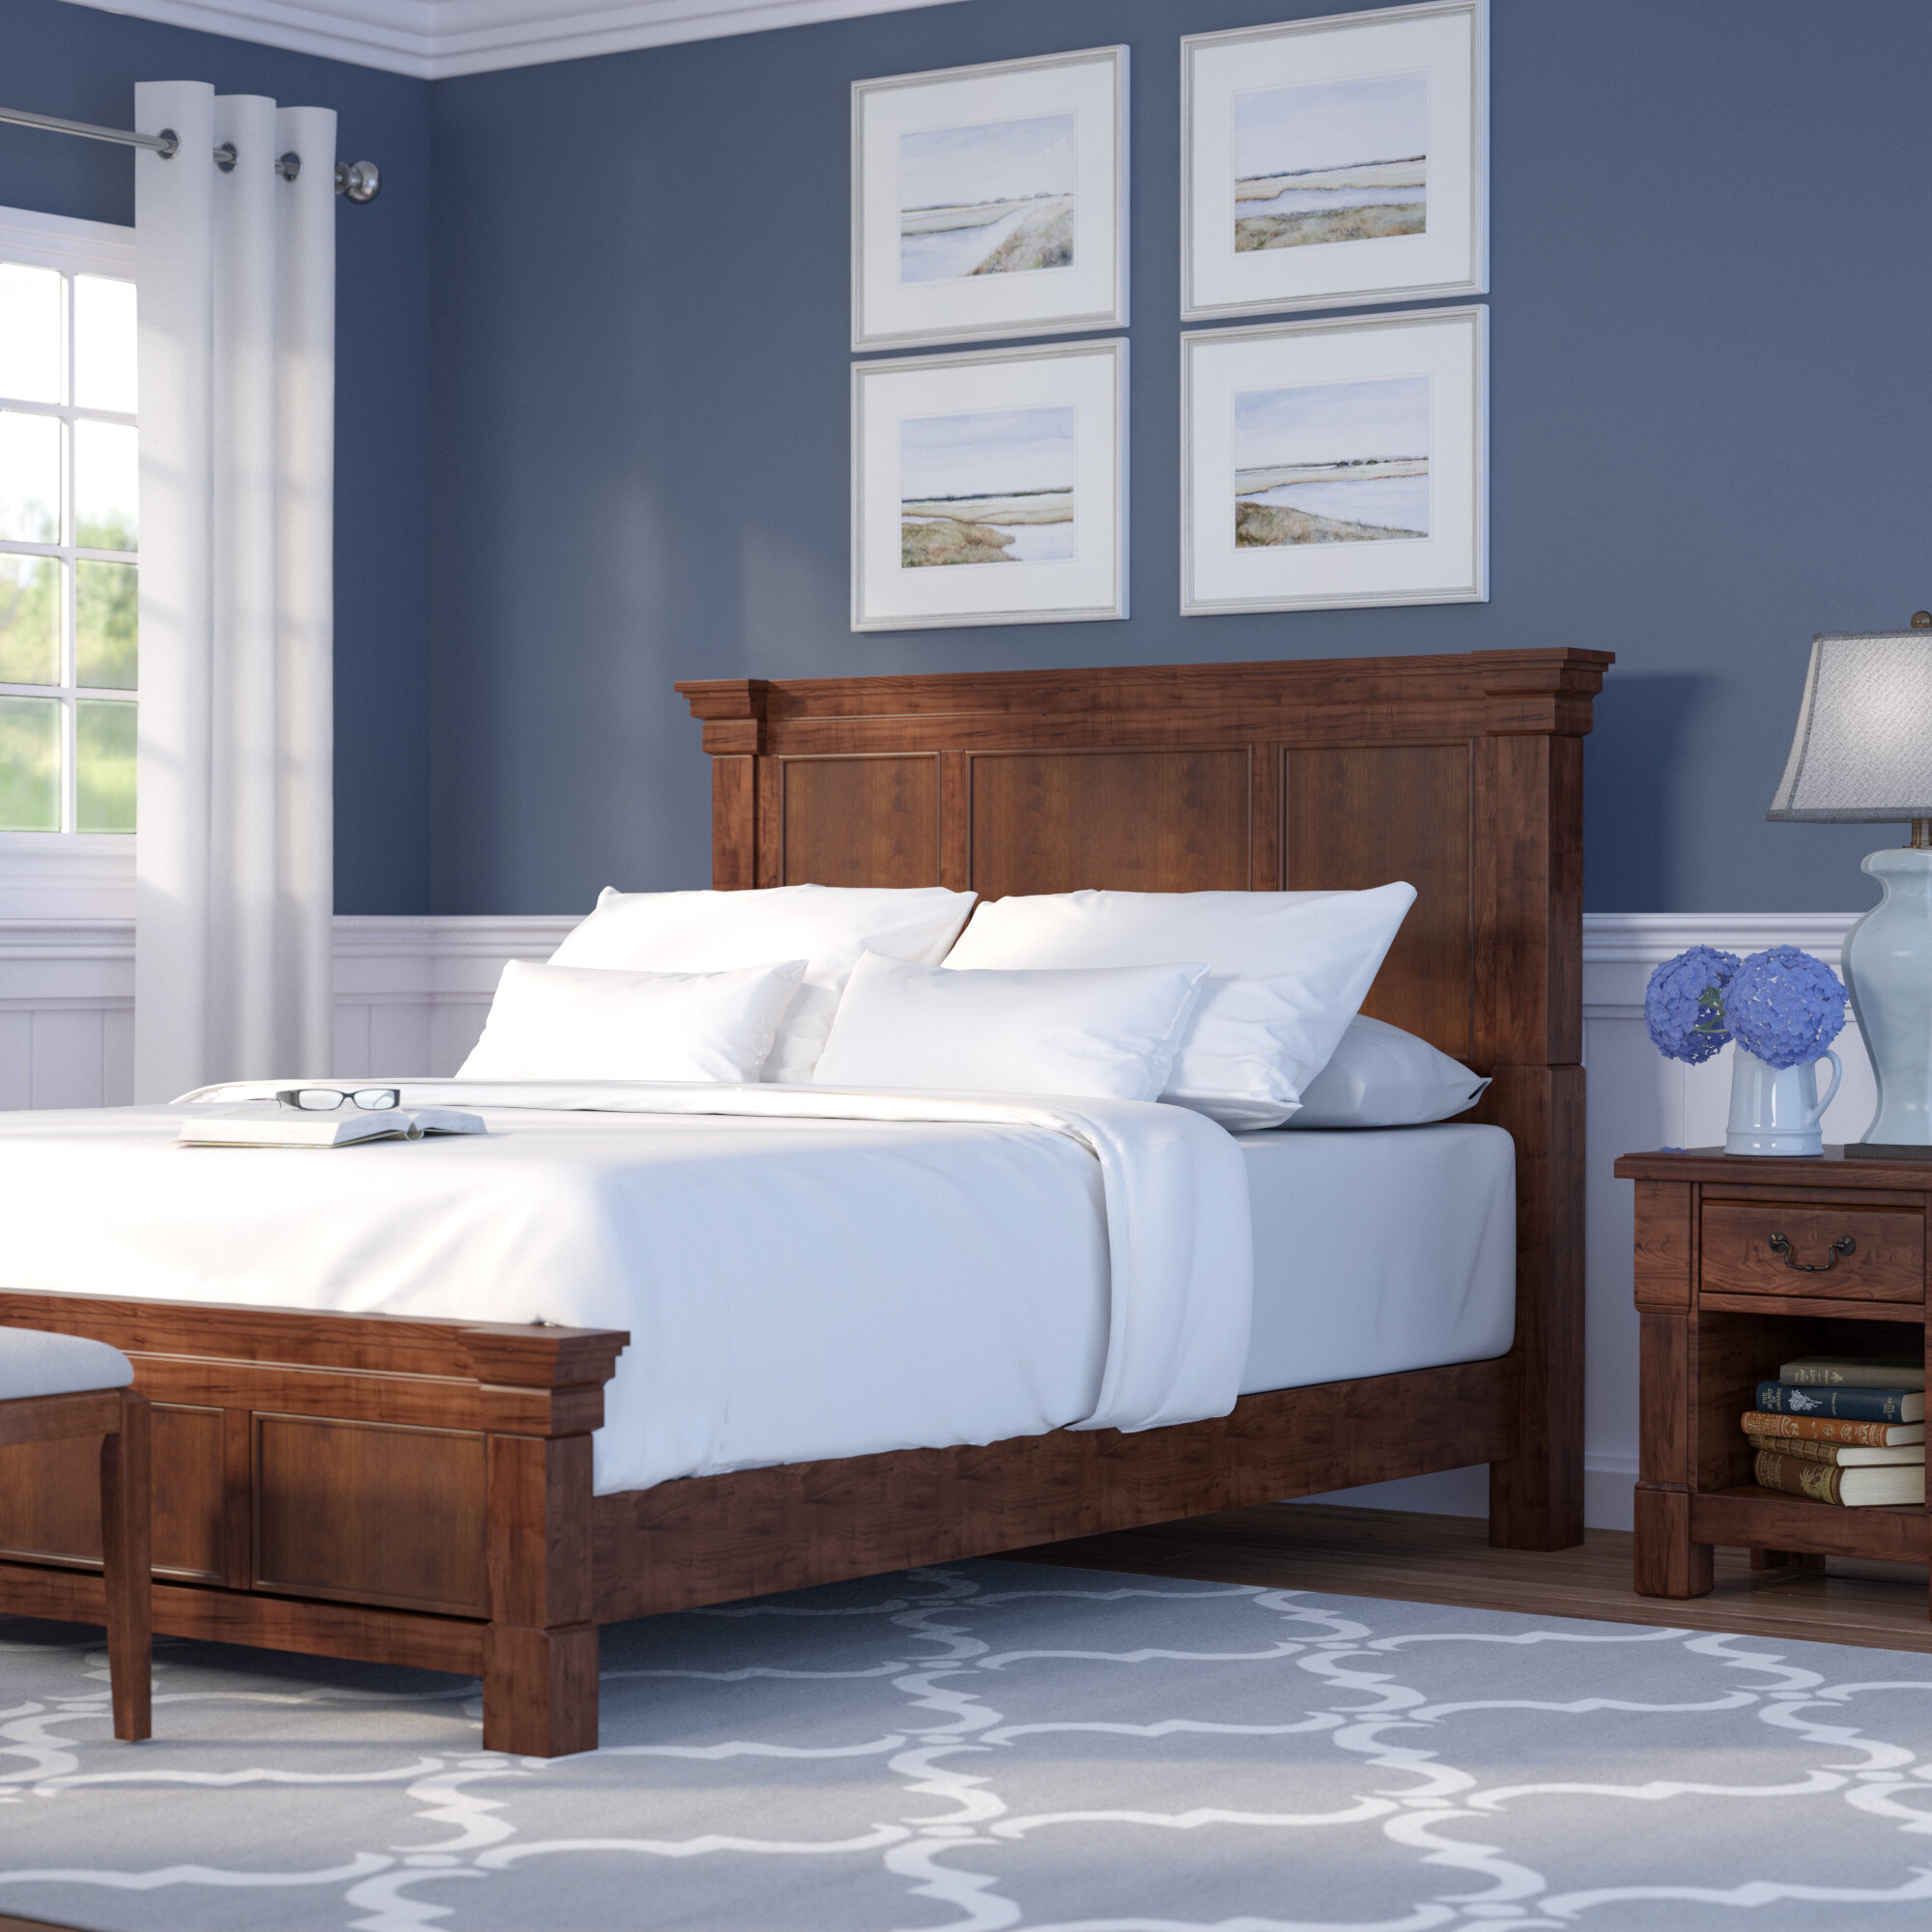 4 Expert Tips To Choose A Bedroom Set Visualhunt